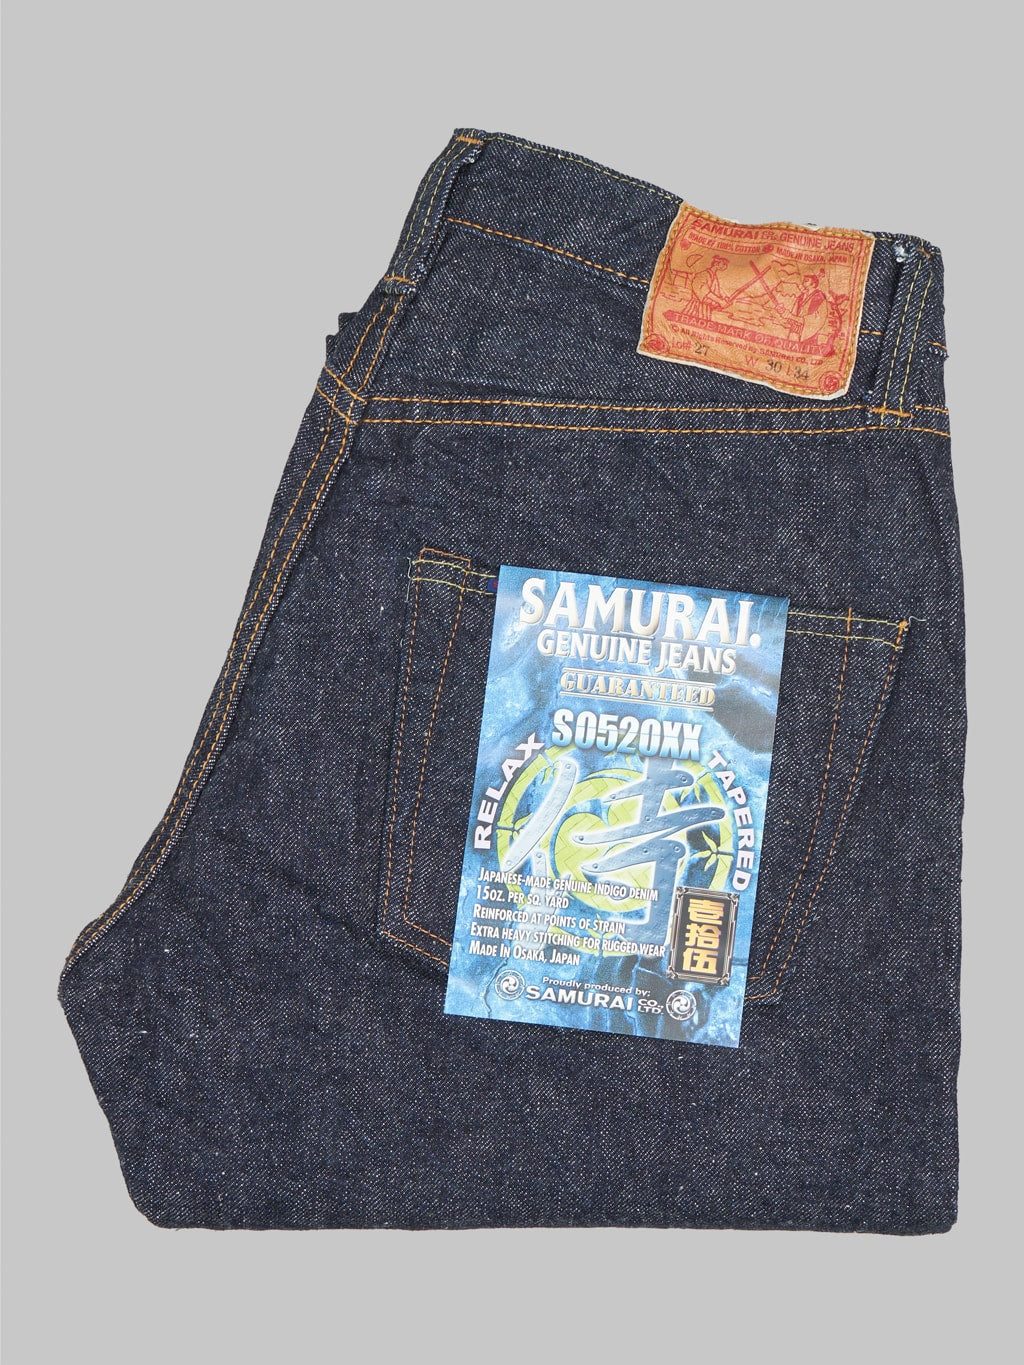 samurai jeans s0520xx otokogi 15oz relaxed tapered jeans japanese made